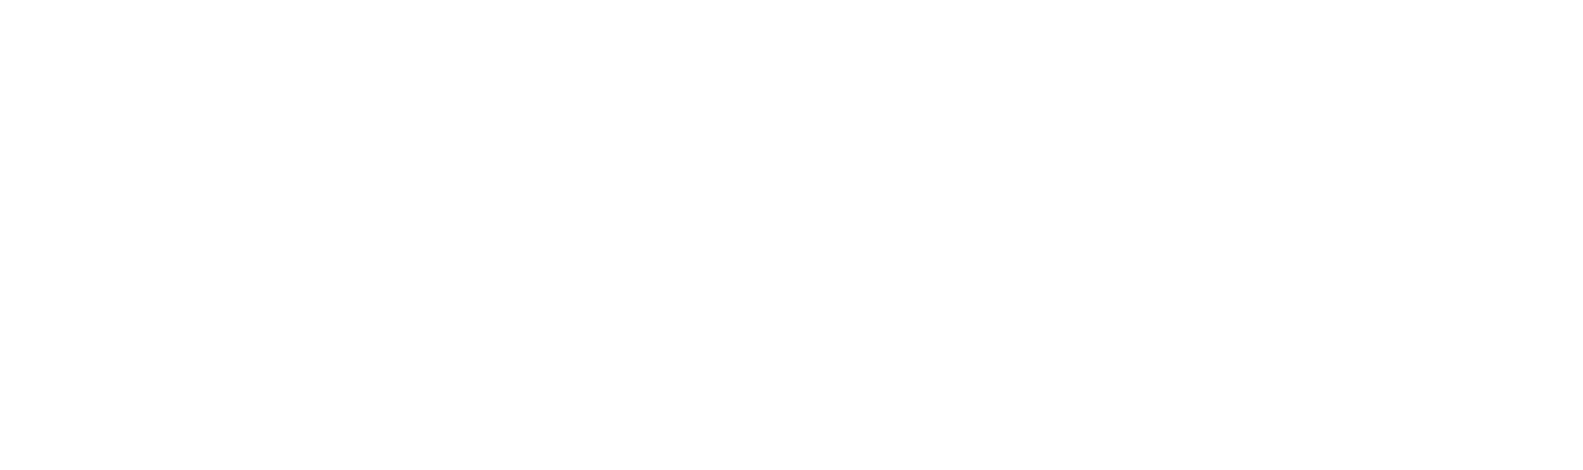 CMS Energy
 logo for dark backgrounds (transparent PNG)